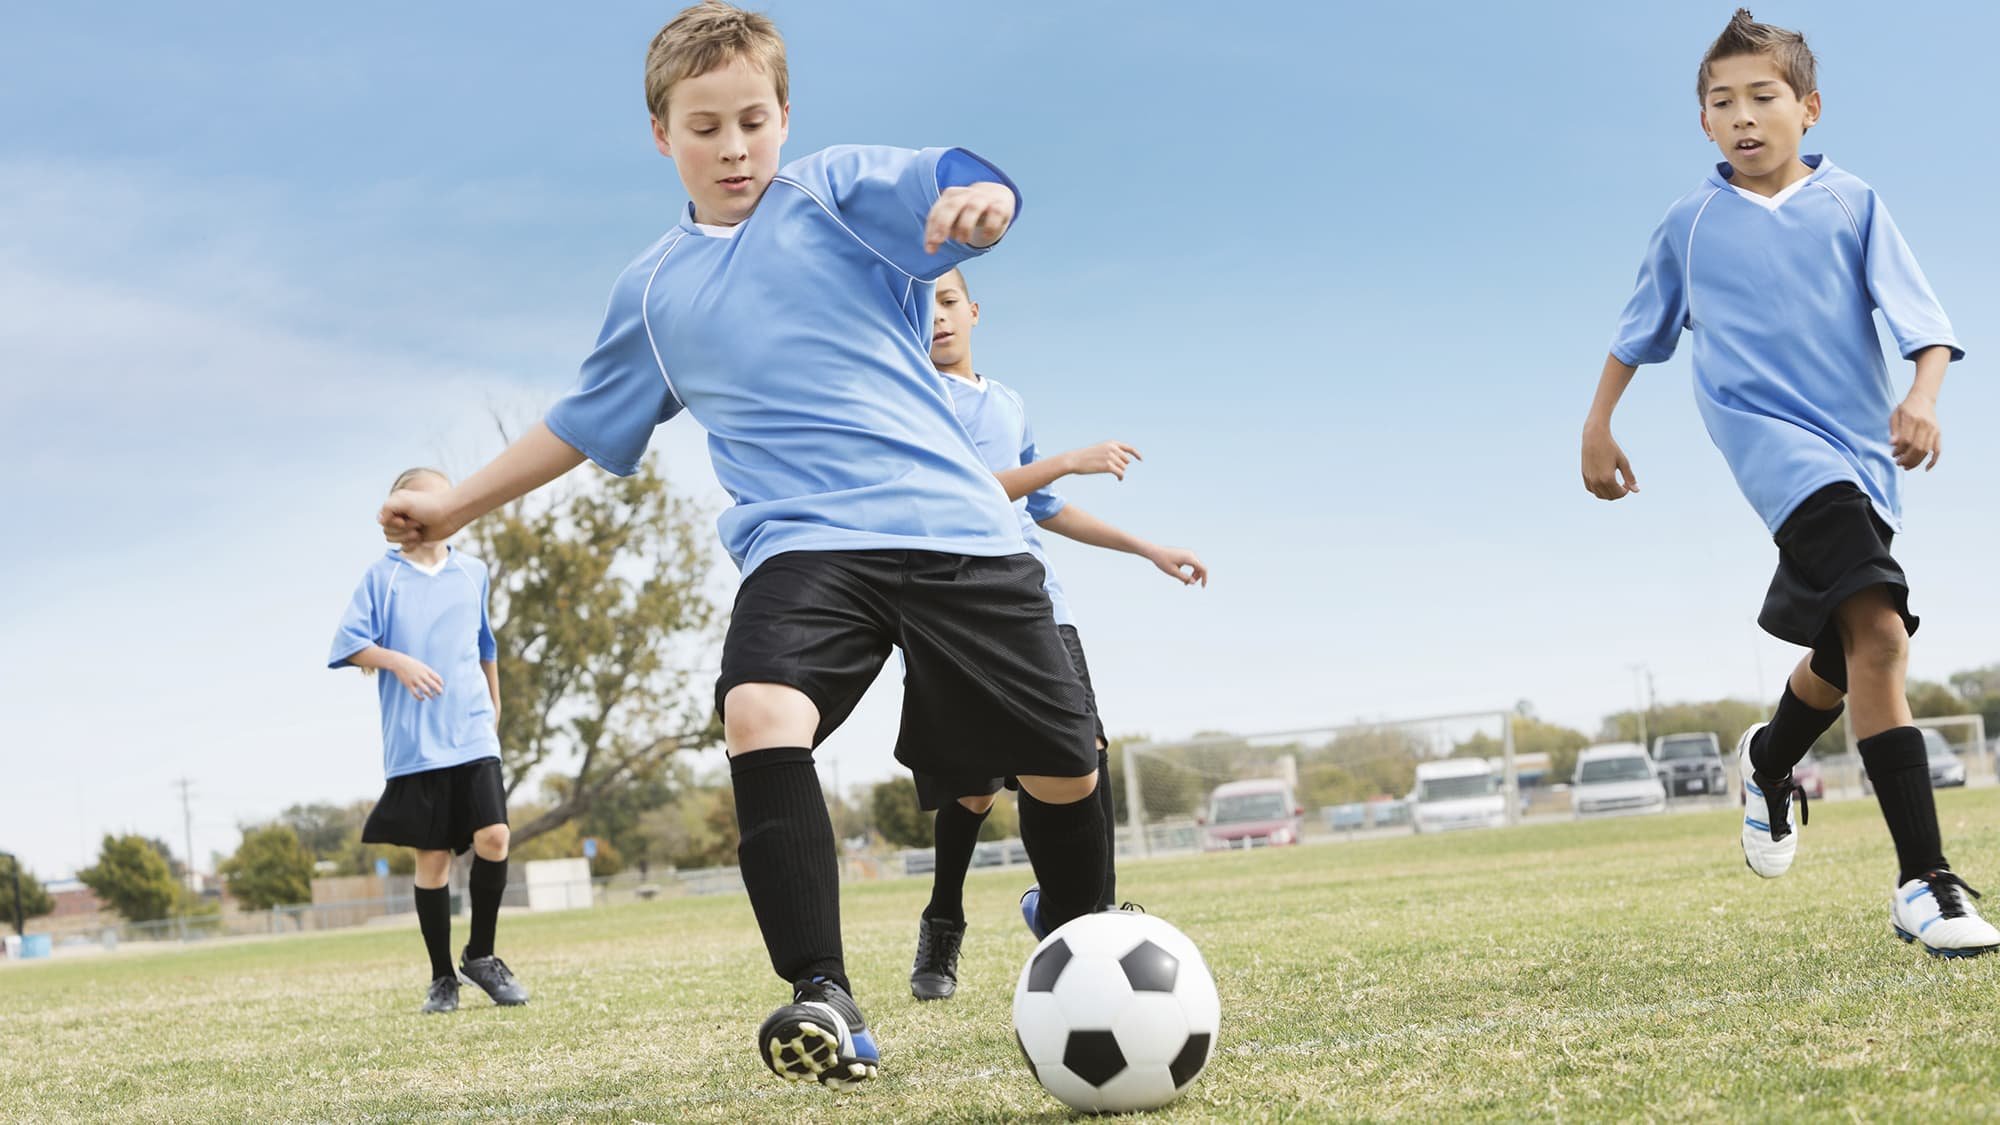 How to play sports. Футбол дети. Дети играющие в футбол. Мальчик футболист. Мальчик с футбольным мячом.